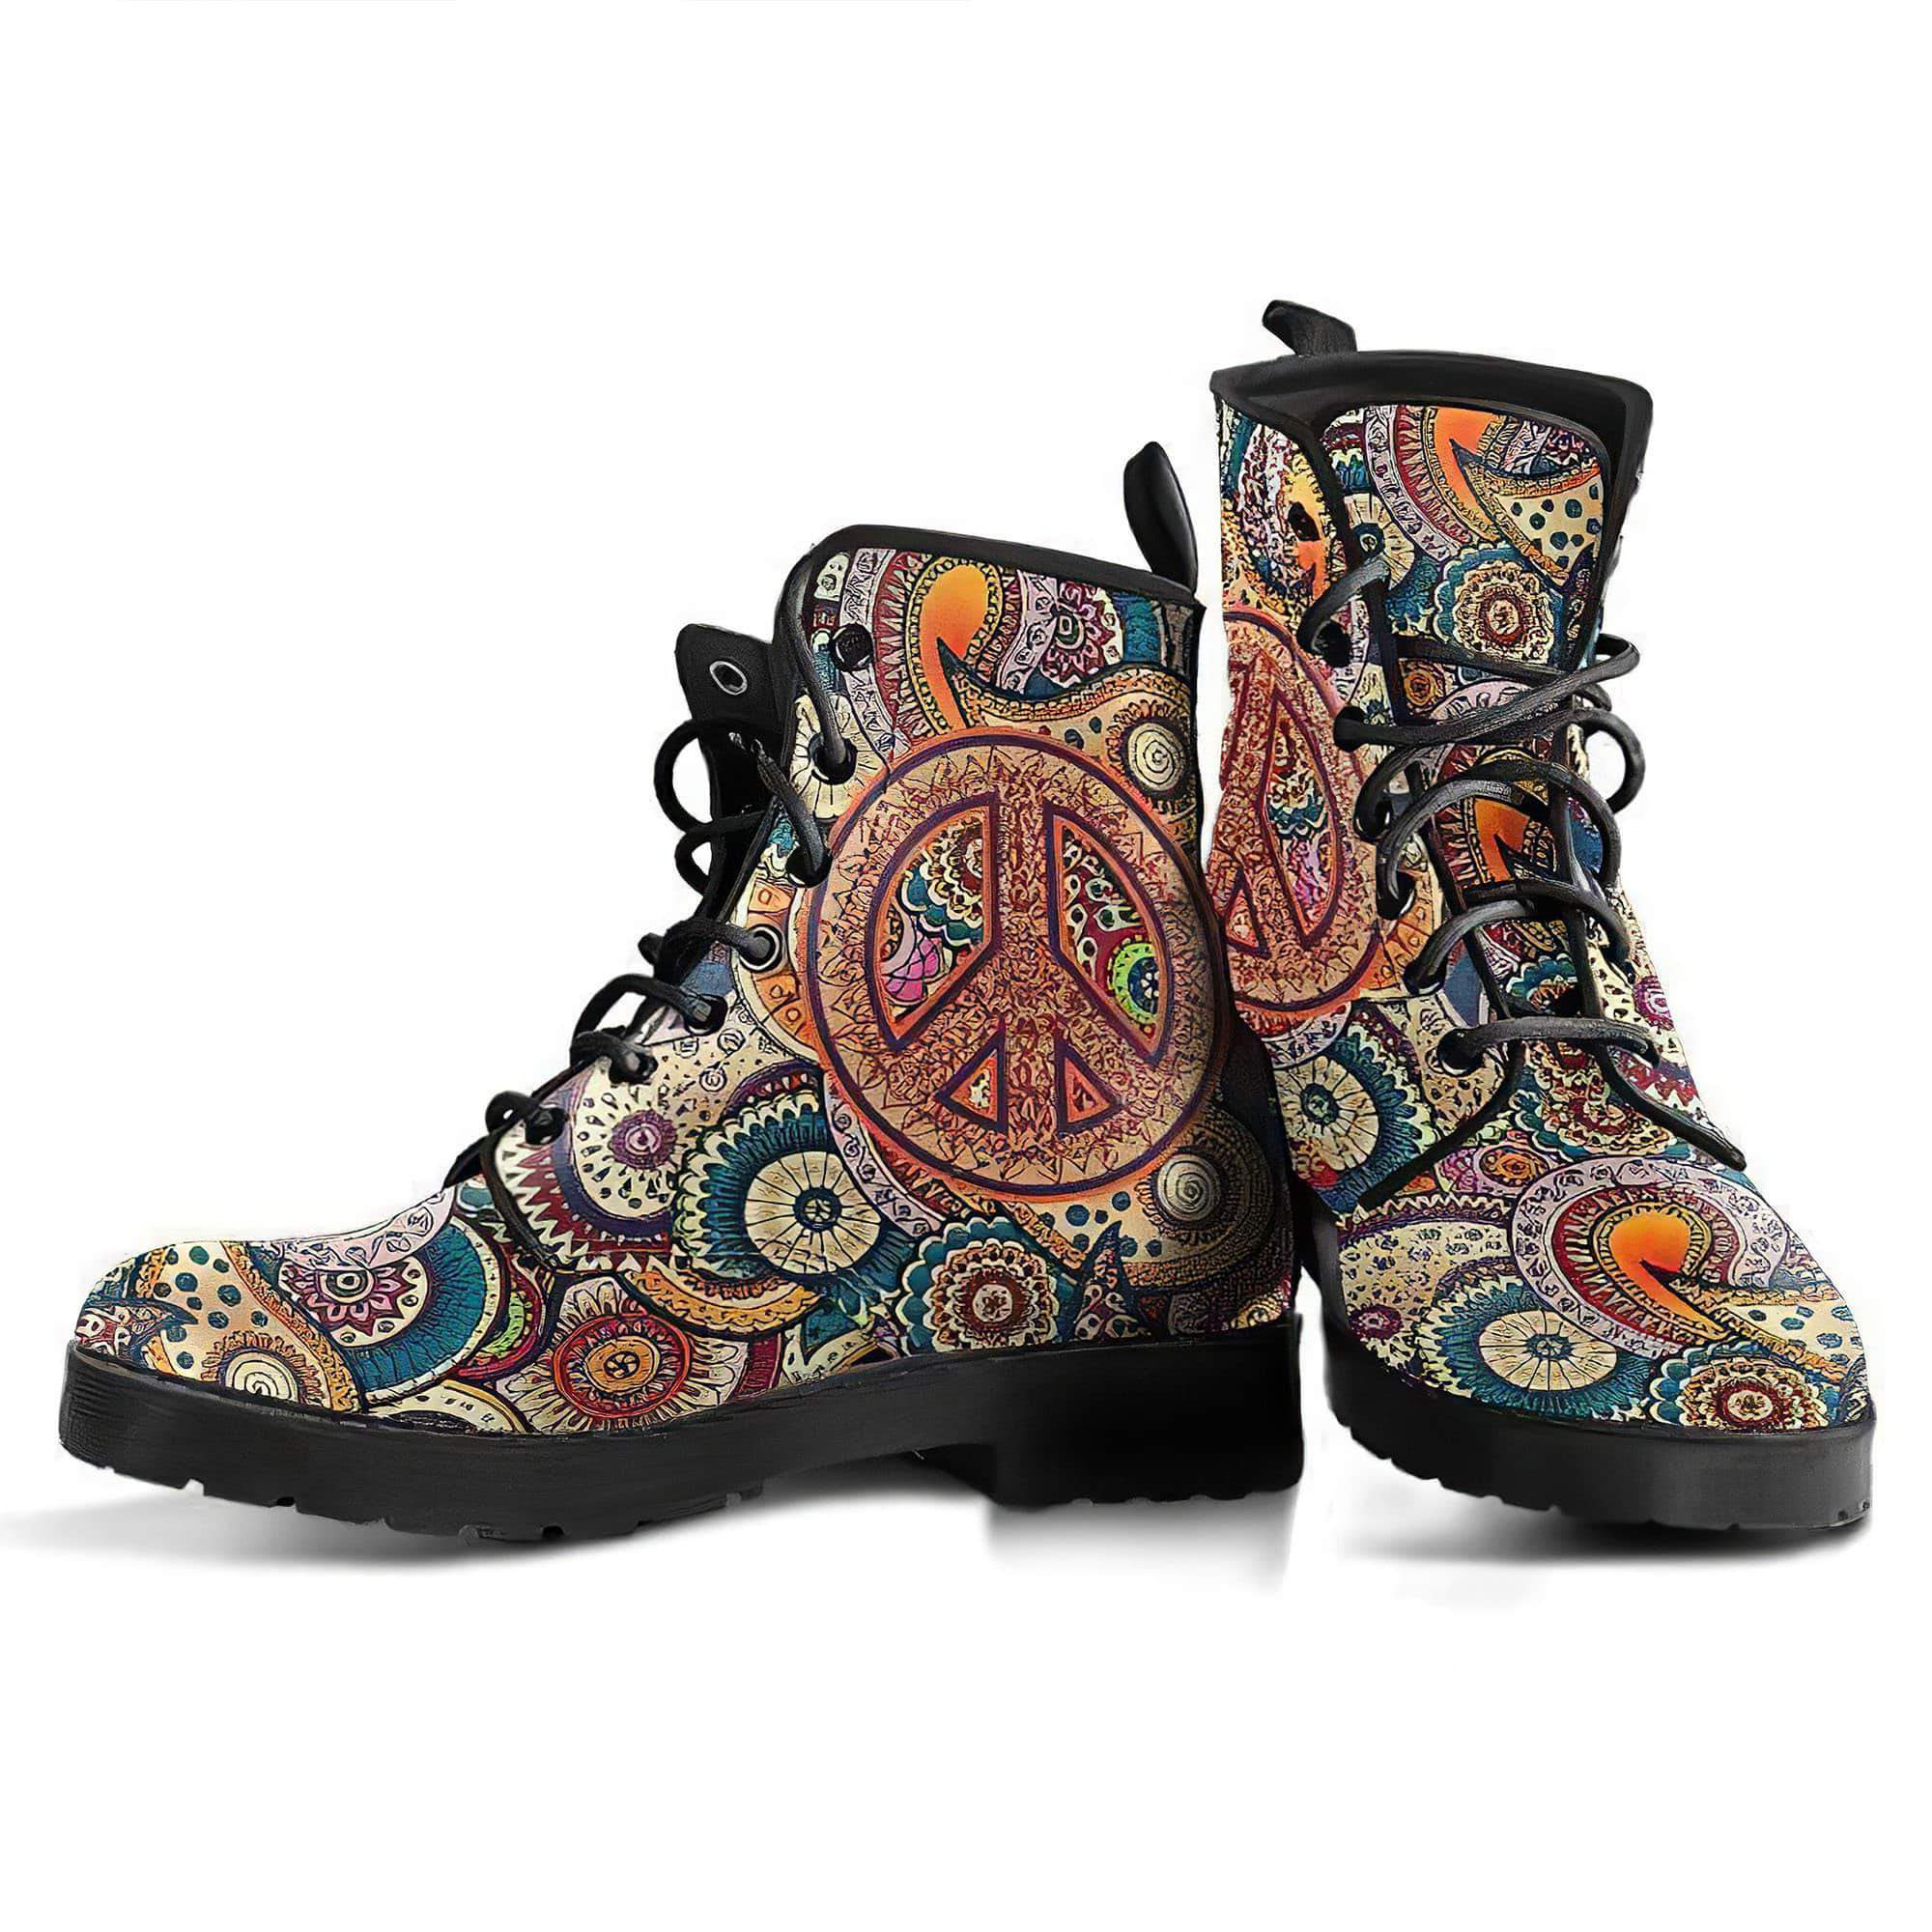 peace-henna-mandala-women-s-boots-vegan-friendly-leather-women-s-leather-boots-12051925073981.jpg